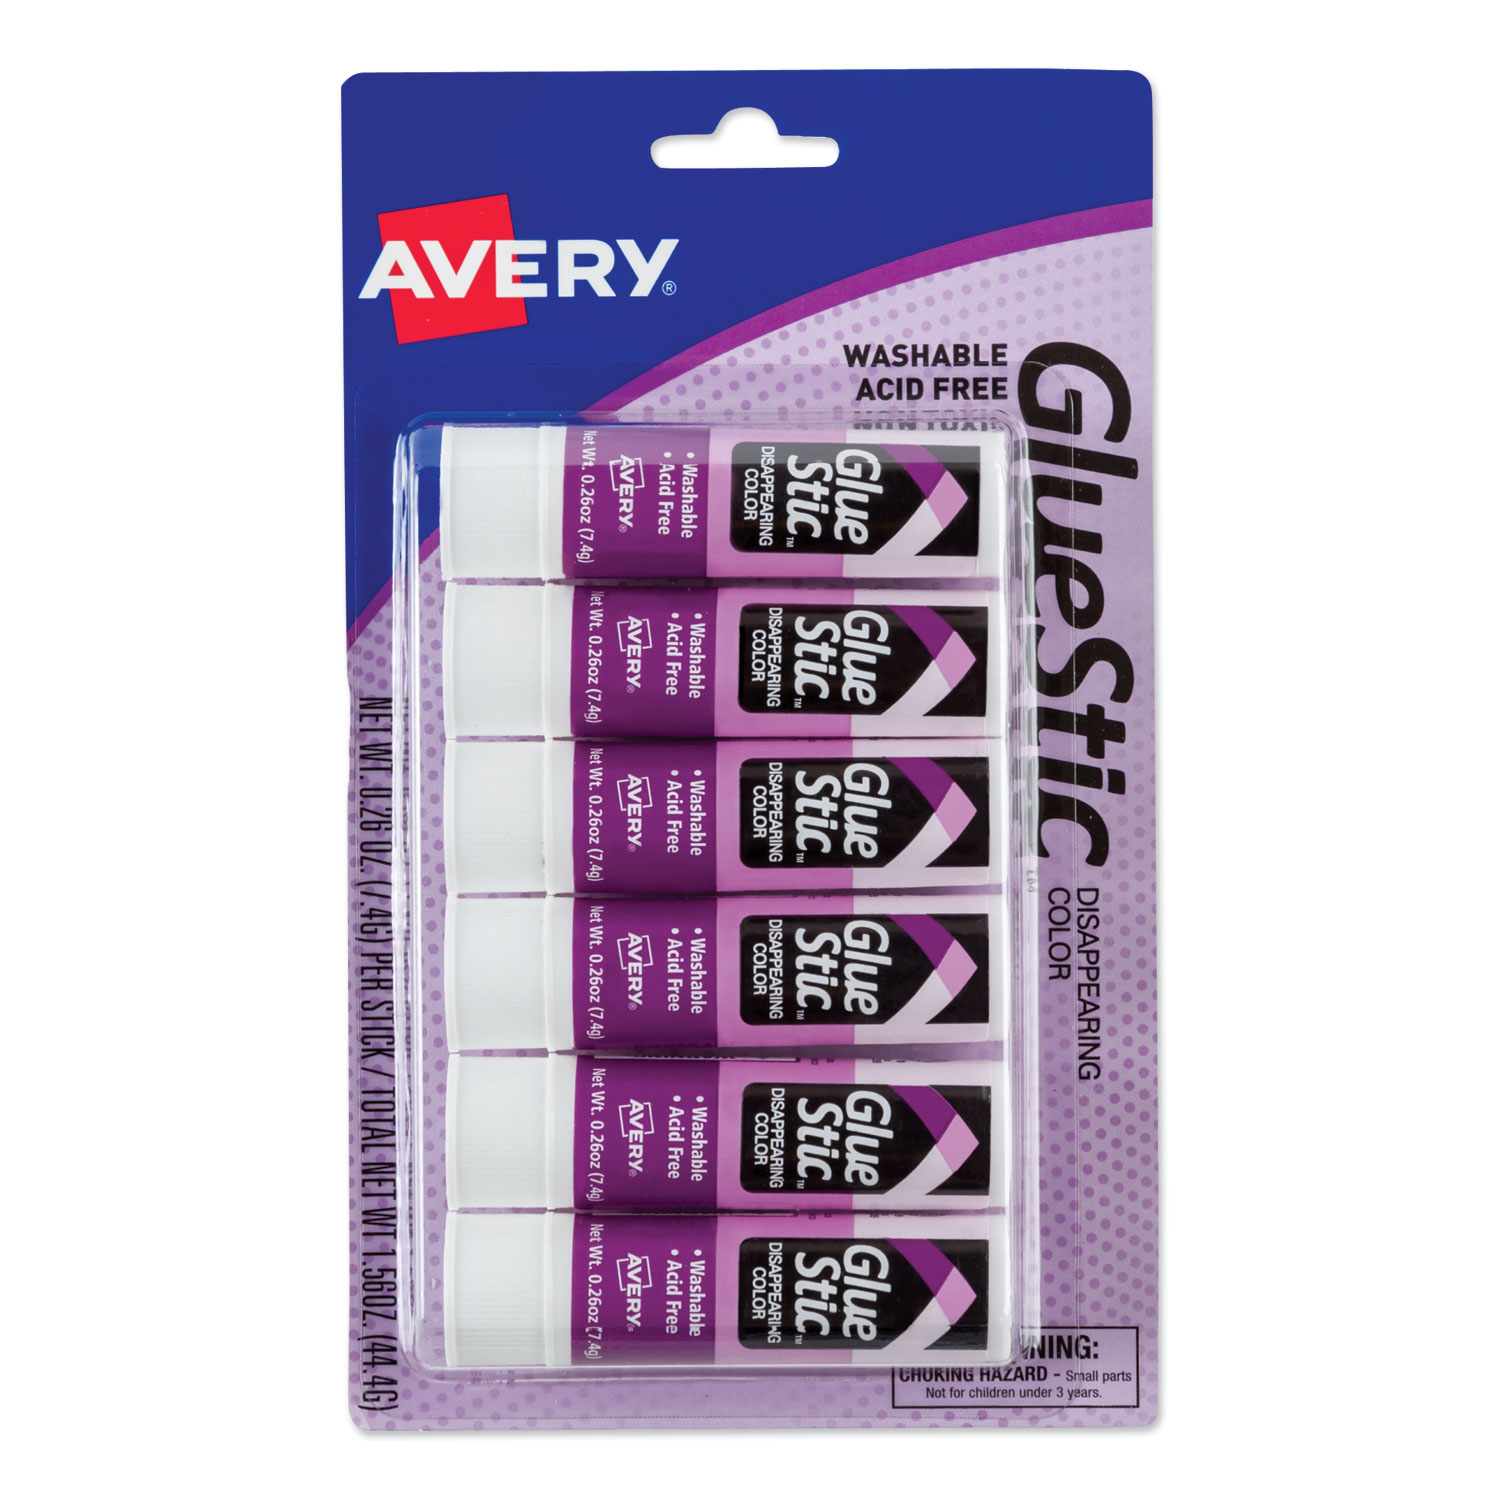  Avery Glue Stic, White, Washable, Non-Toxic, 1.27oz, 6 Glue  Sticks, 2-Pack, 12 Total